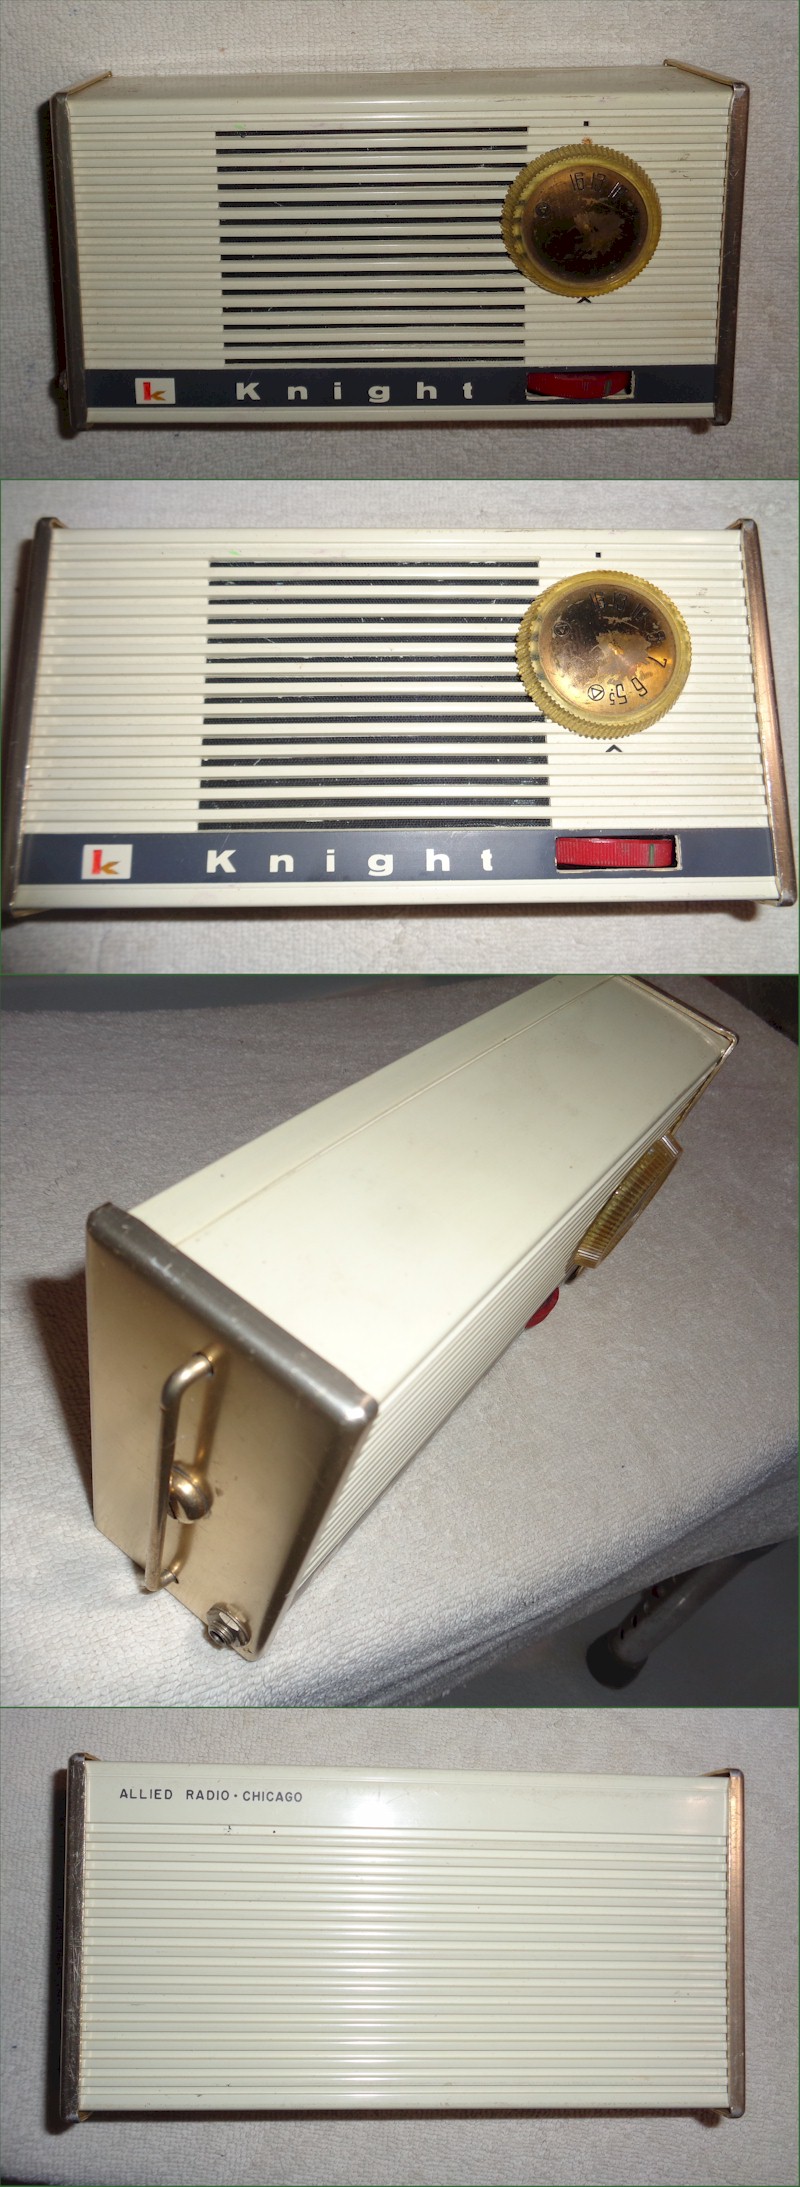 Knight Kit 83Y922 